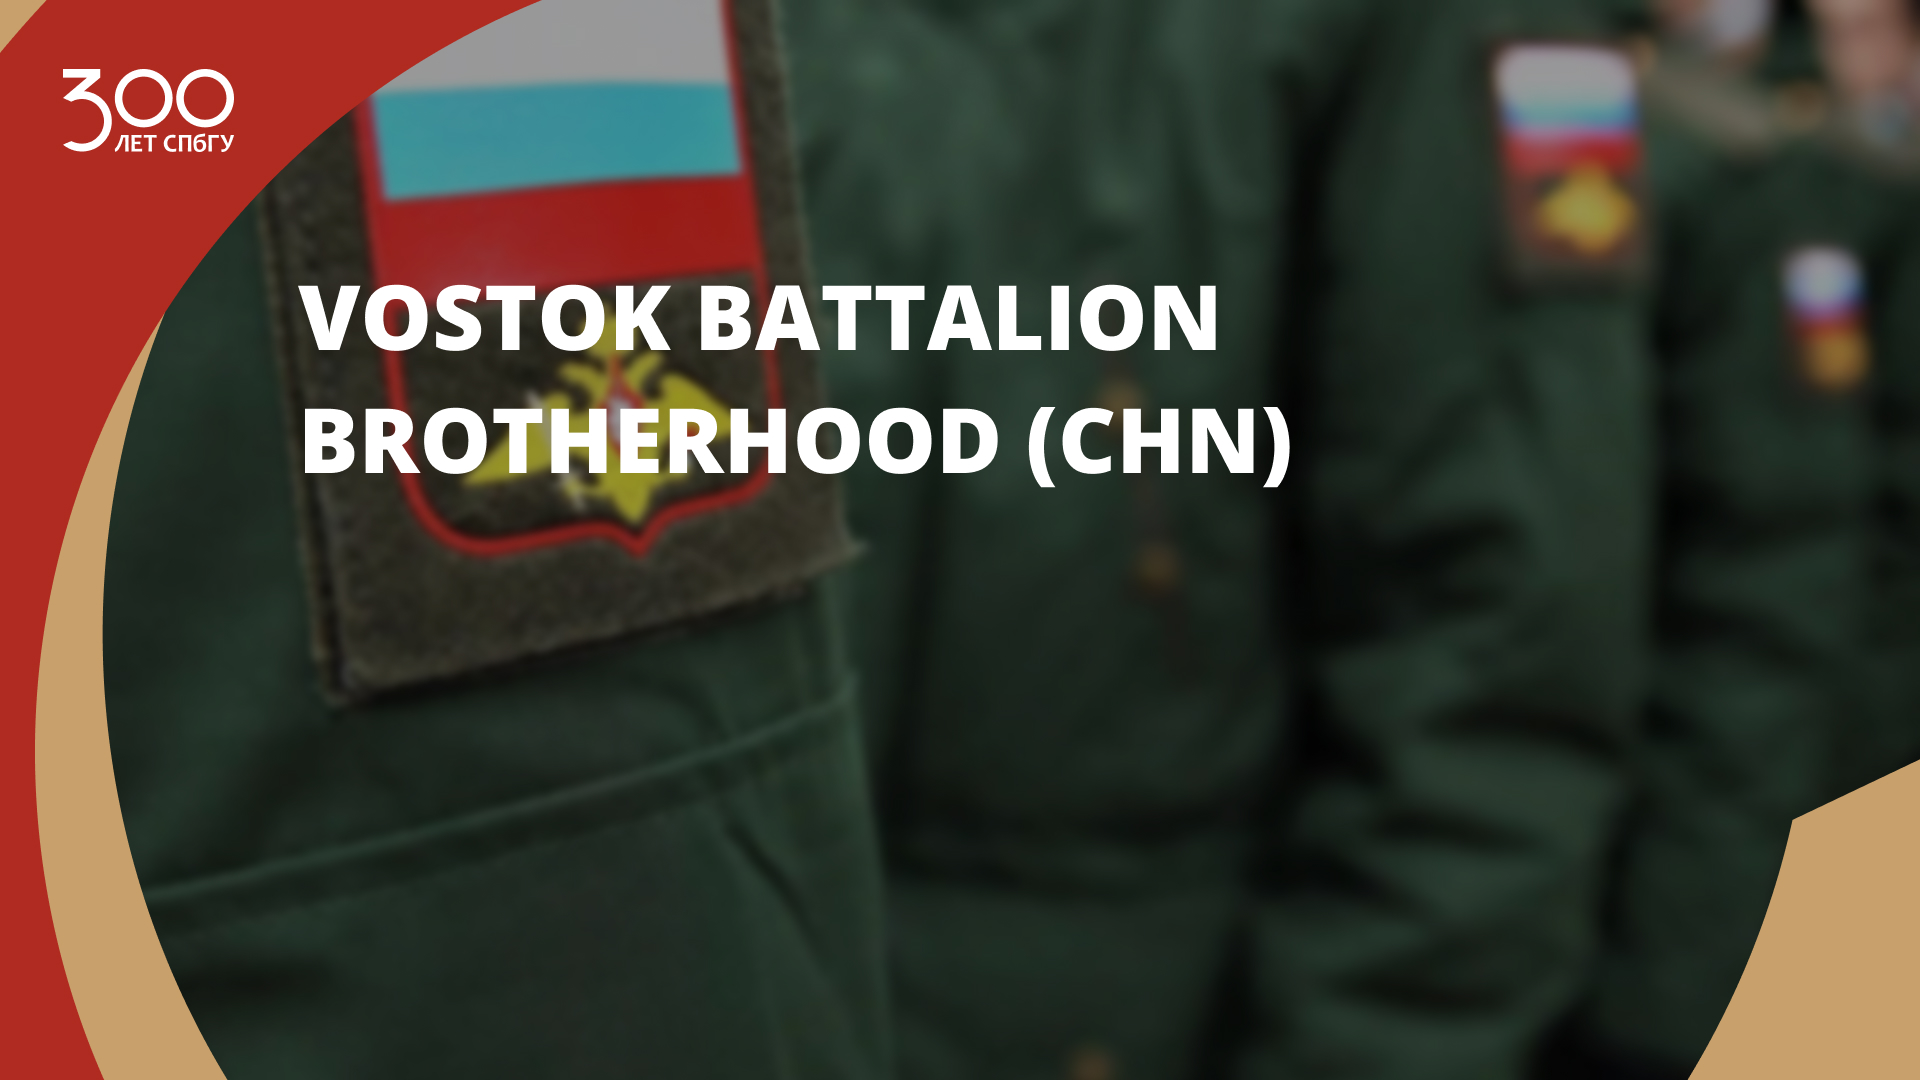 Vostok Battalion Brotherhood (CHN)